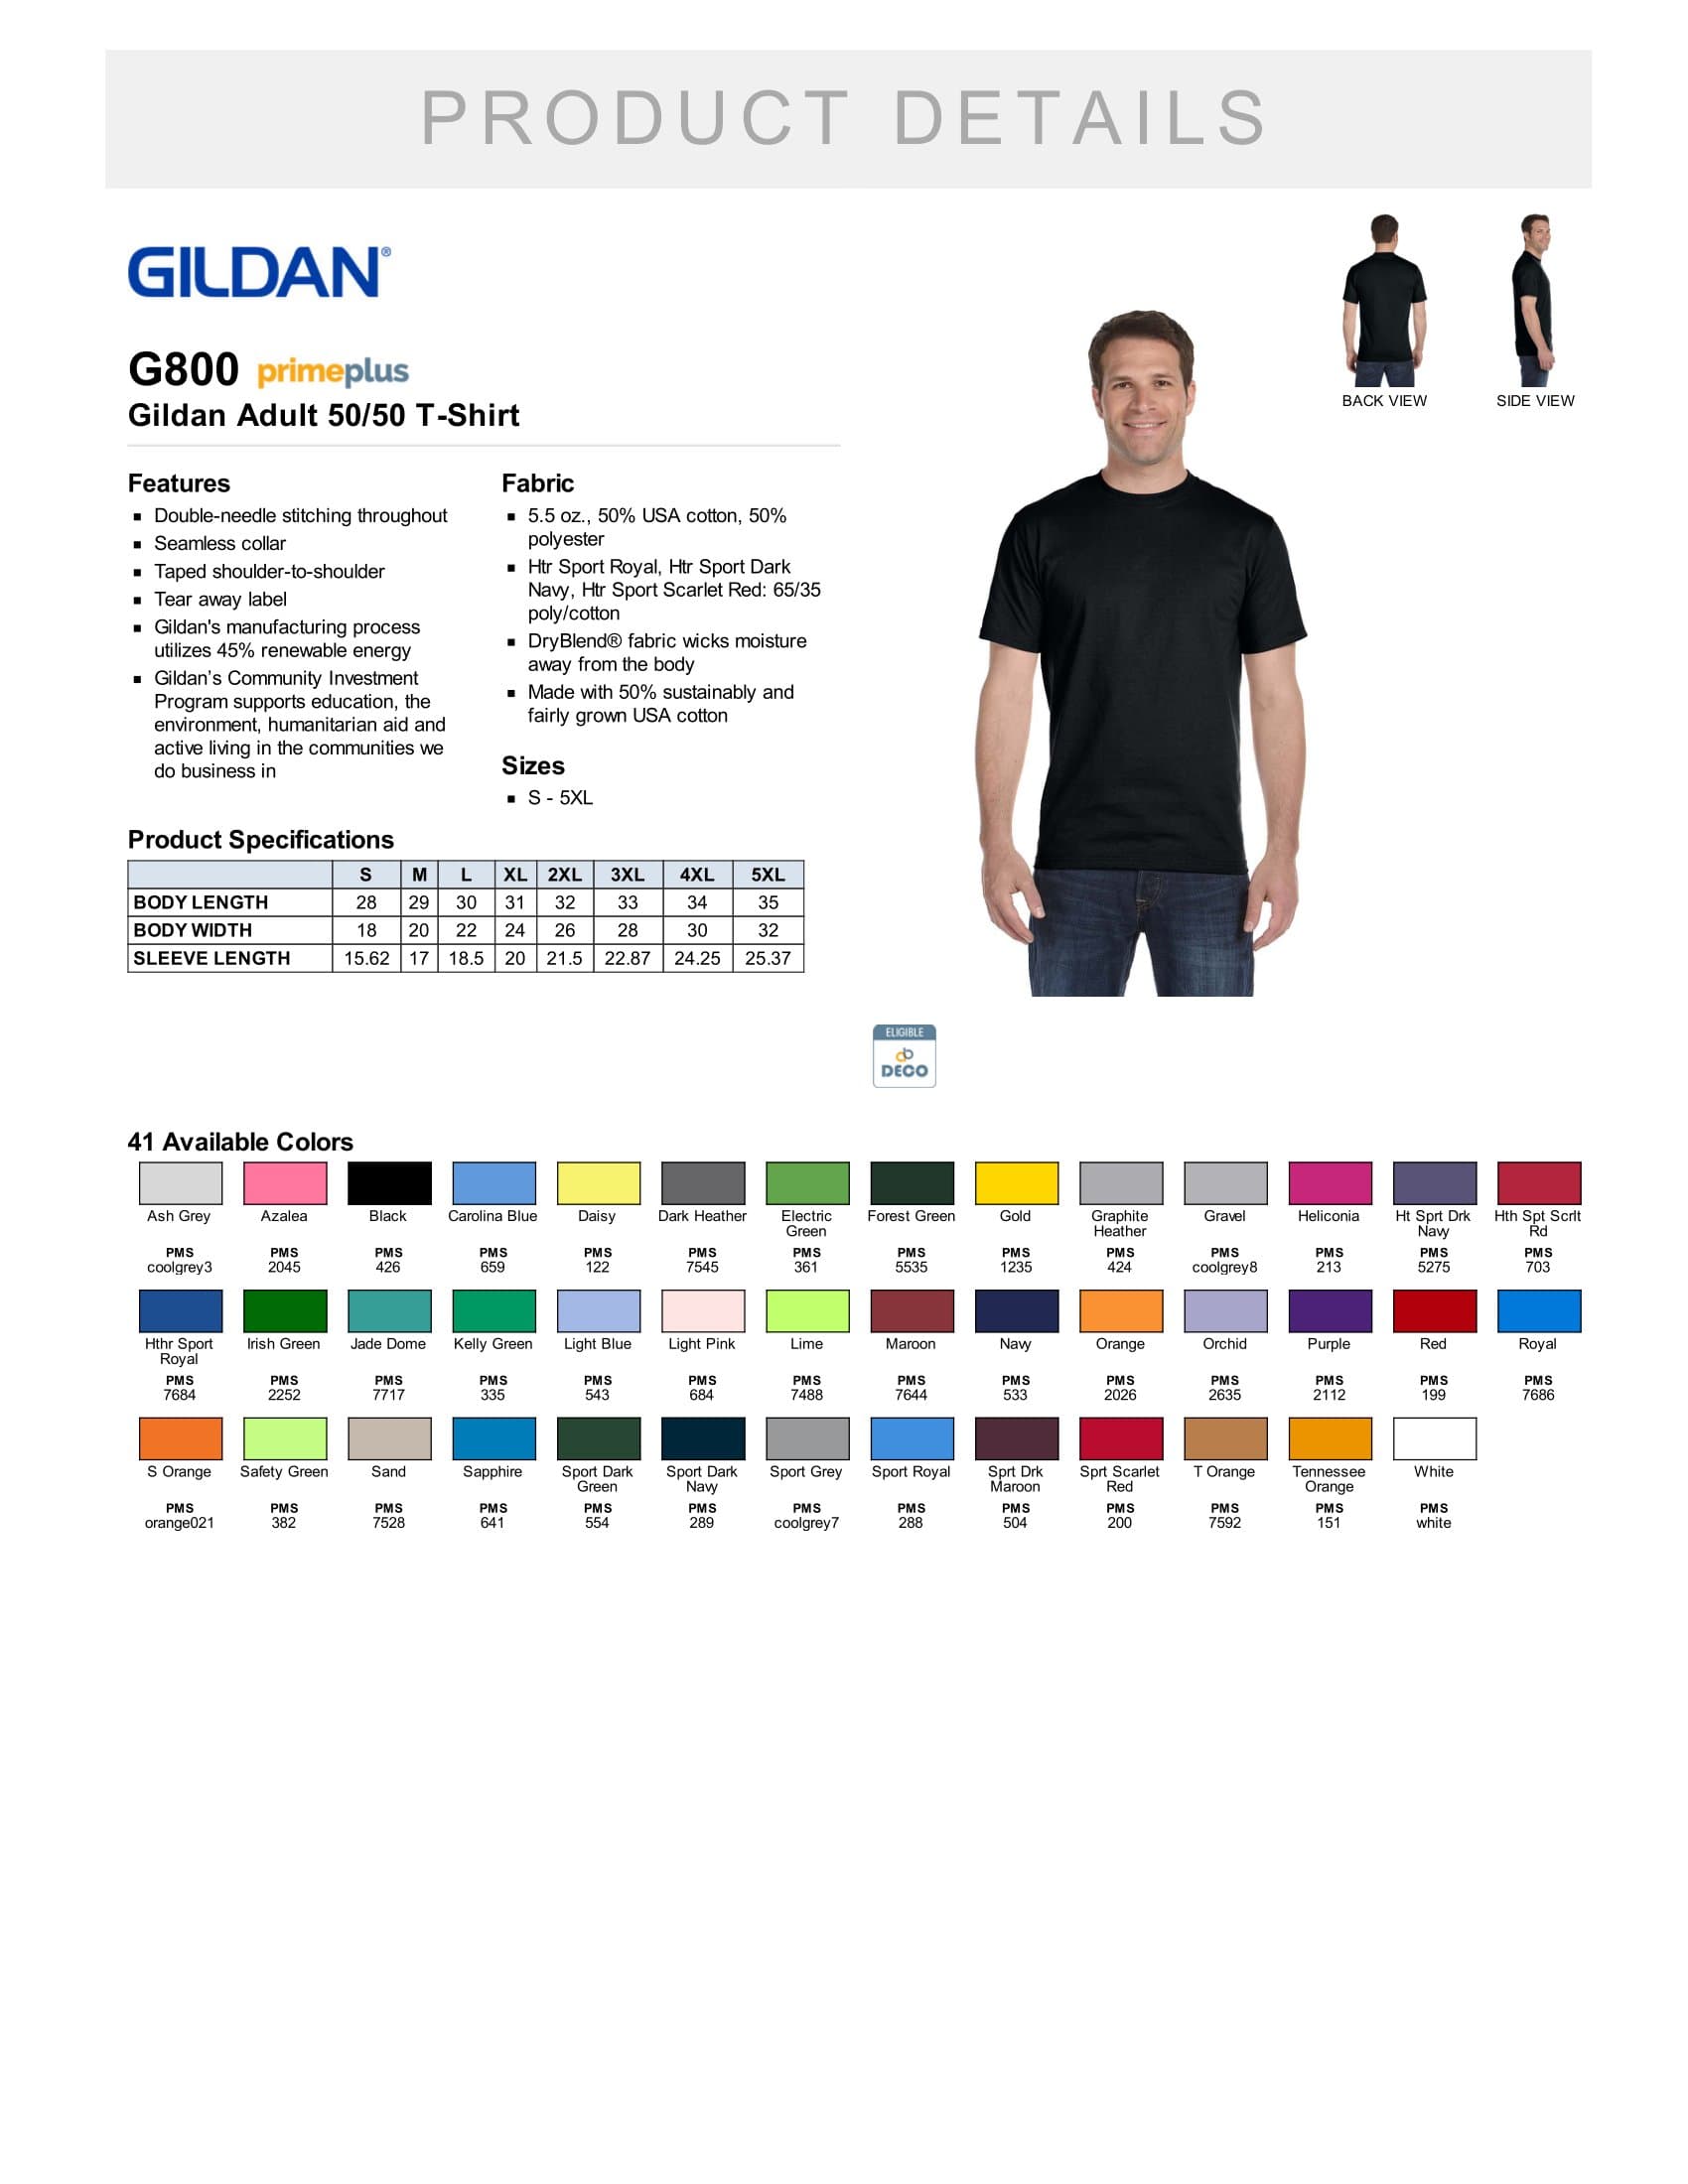 Gildan 800